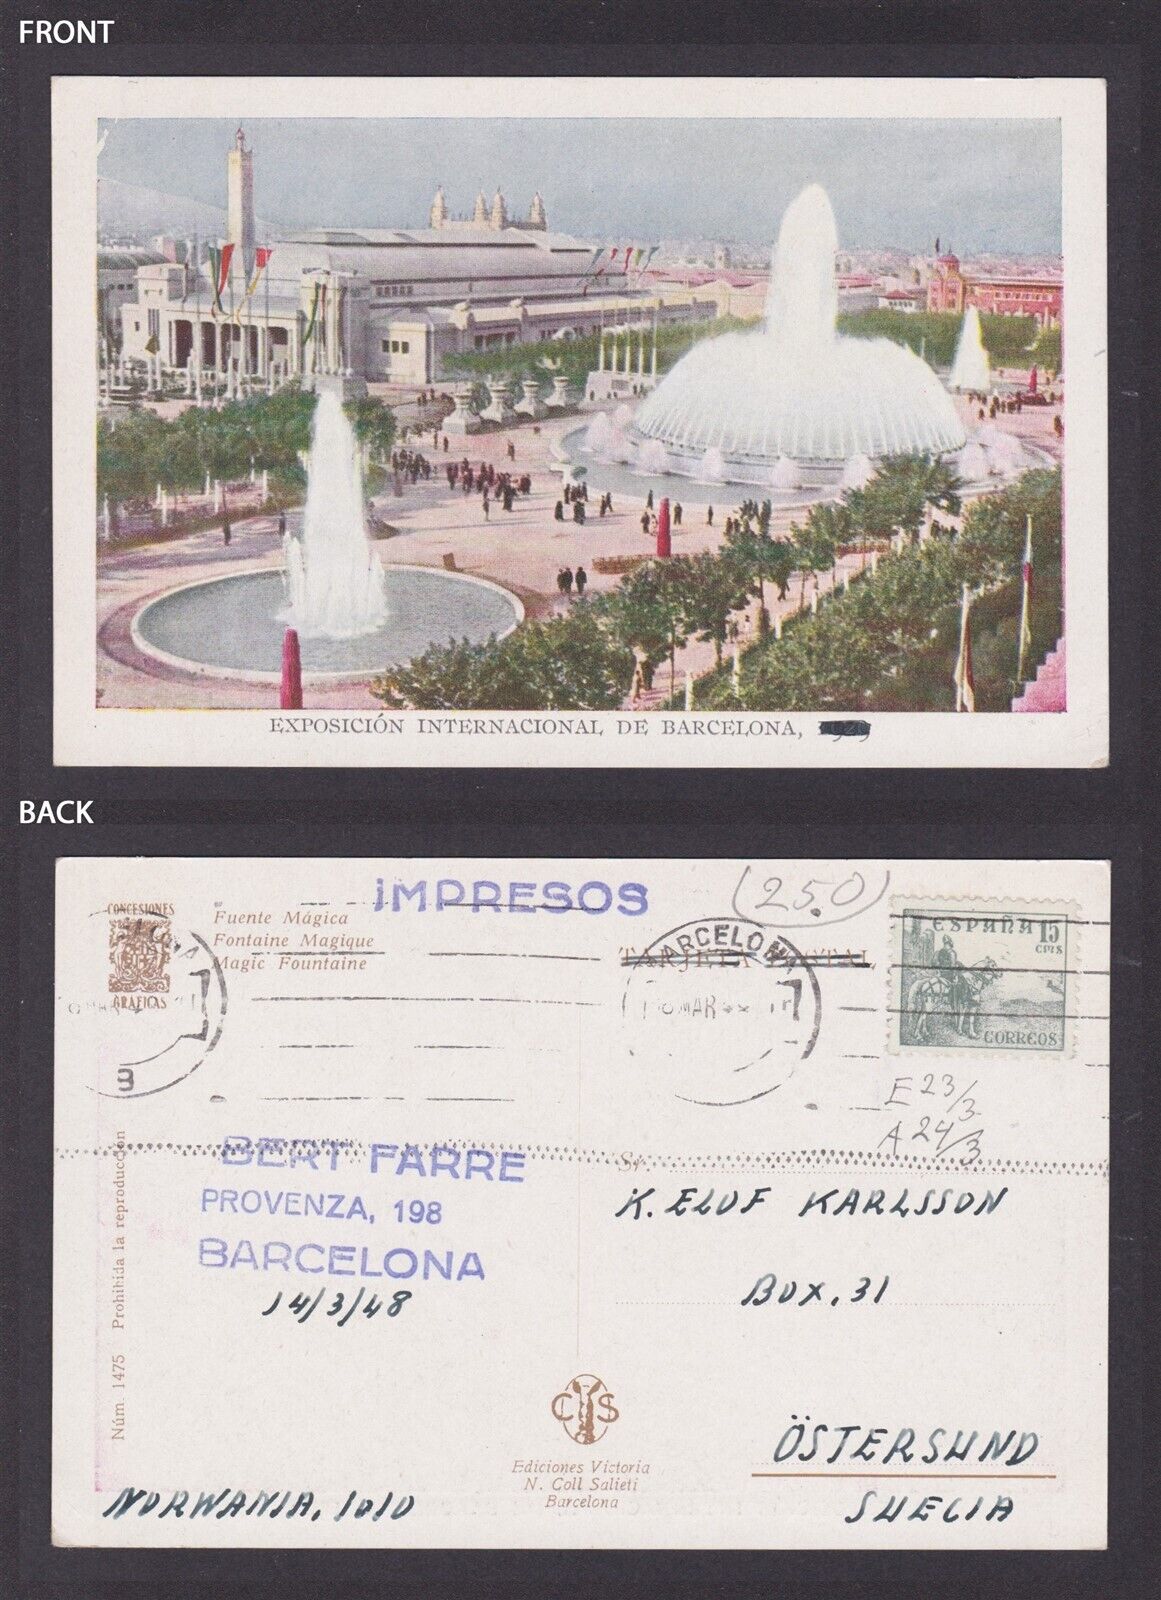 SPAIN, Vintge postcard, Barcelona, Exhibition, Magic Fountain